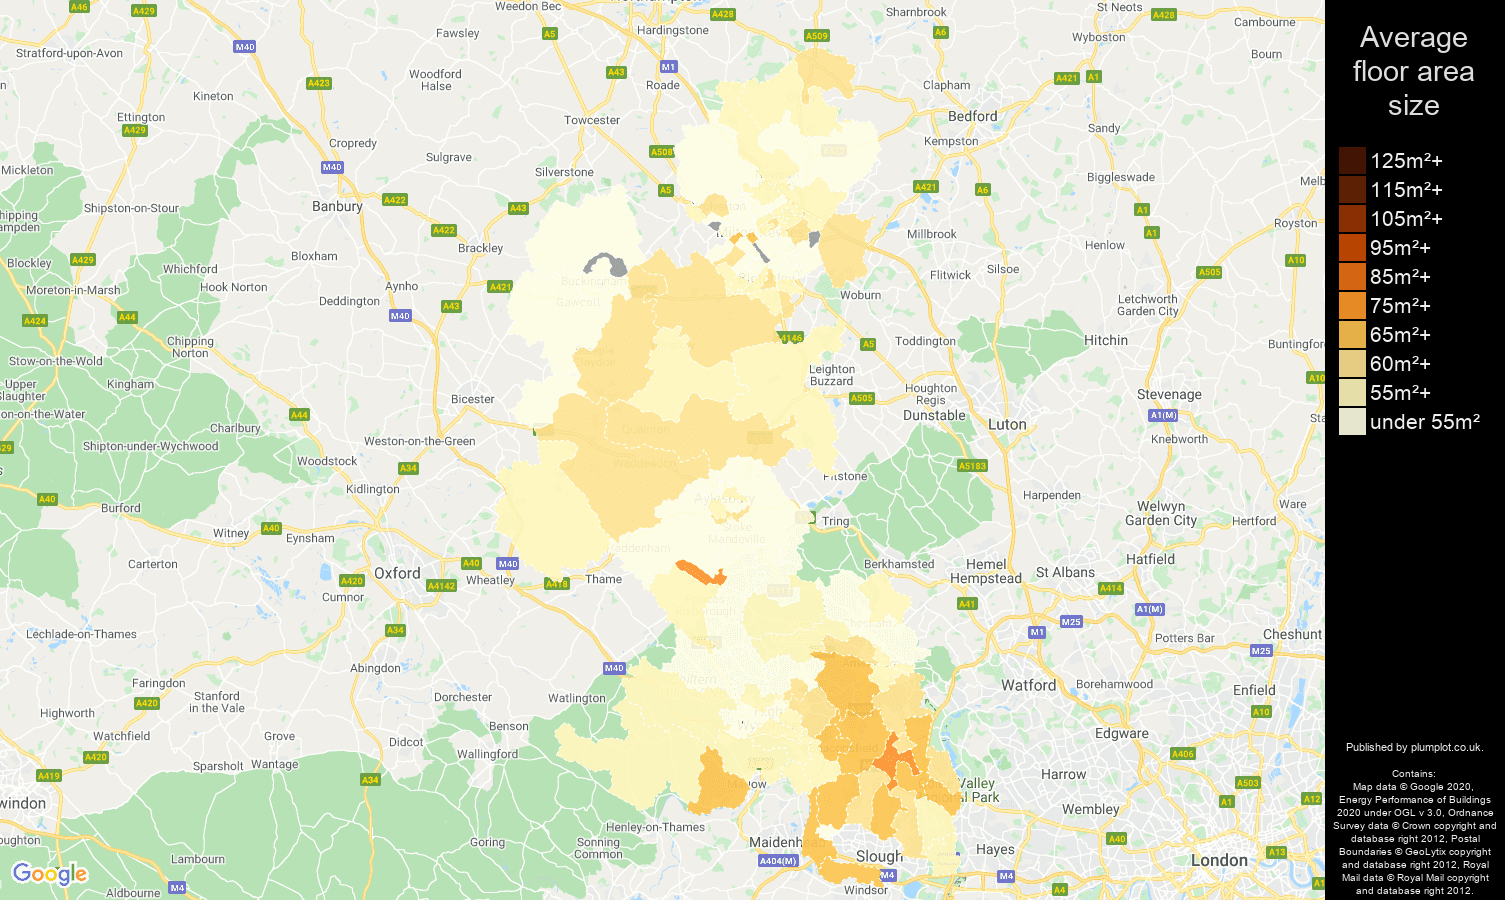 Buckinghamshire map of average floor area size of flats